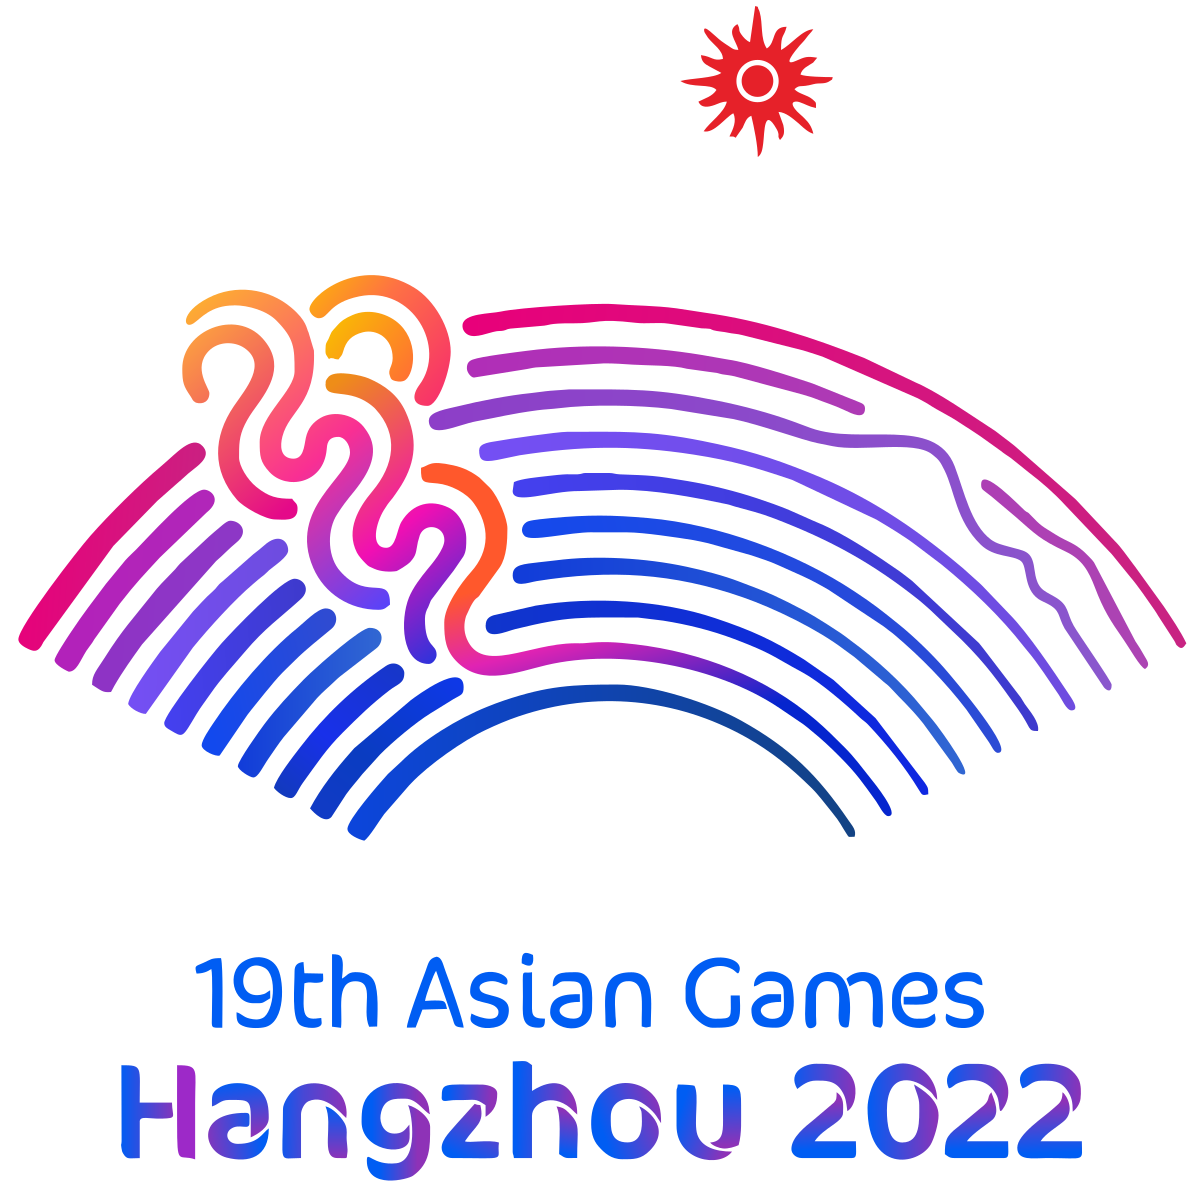 Hangzhou 2022 Asian Games organisers warn against copyright use